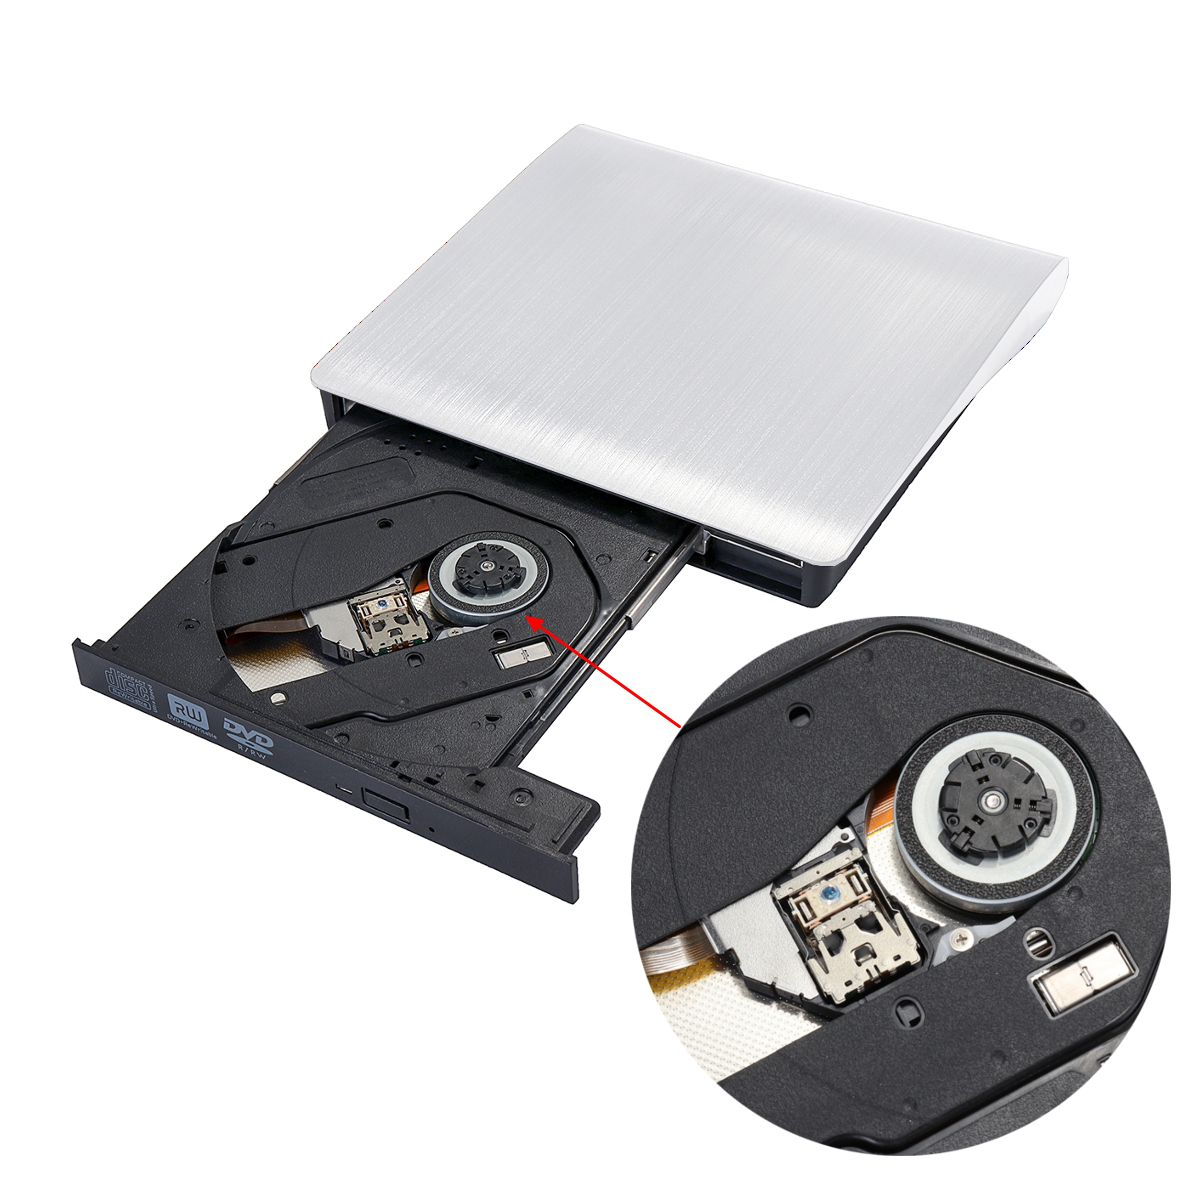 USB 3.0 Slim External DVD Optical Drive DVD-RW CD-RW Combo Drive Burner Reader Player 44